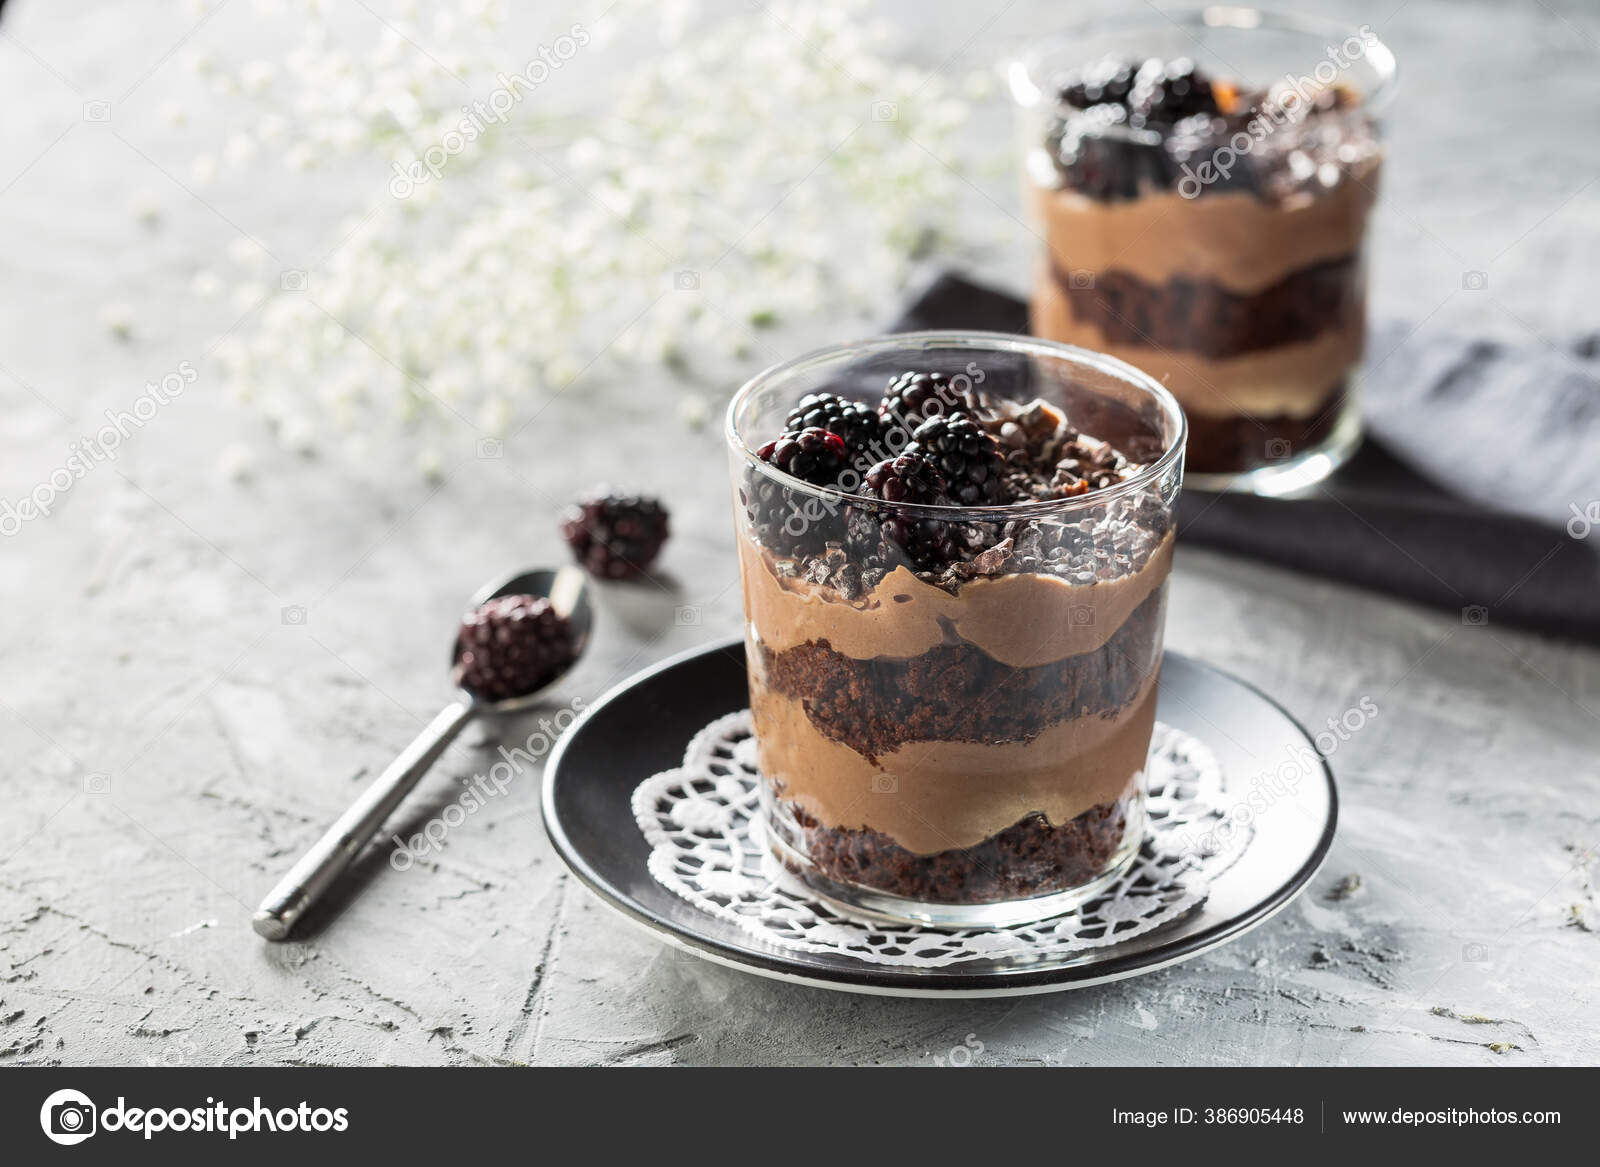 In glass desserts chocolate a Recipe for